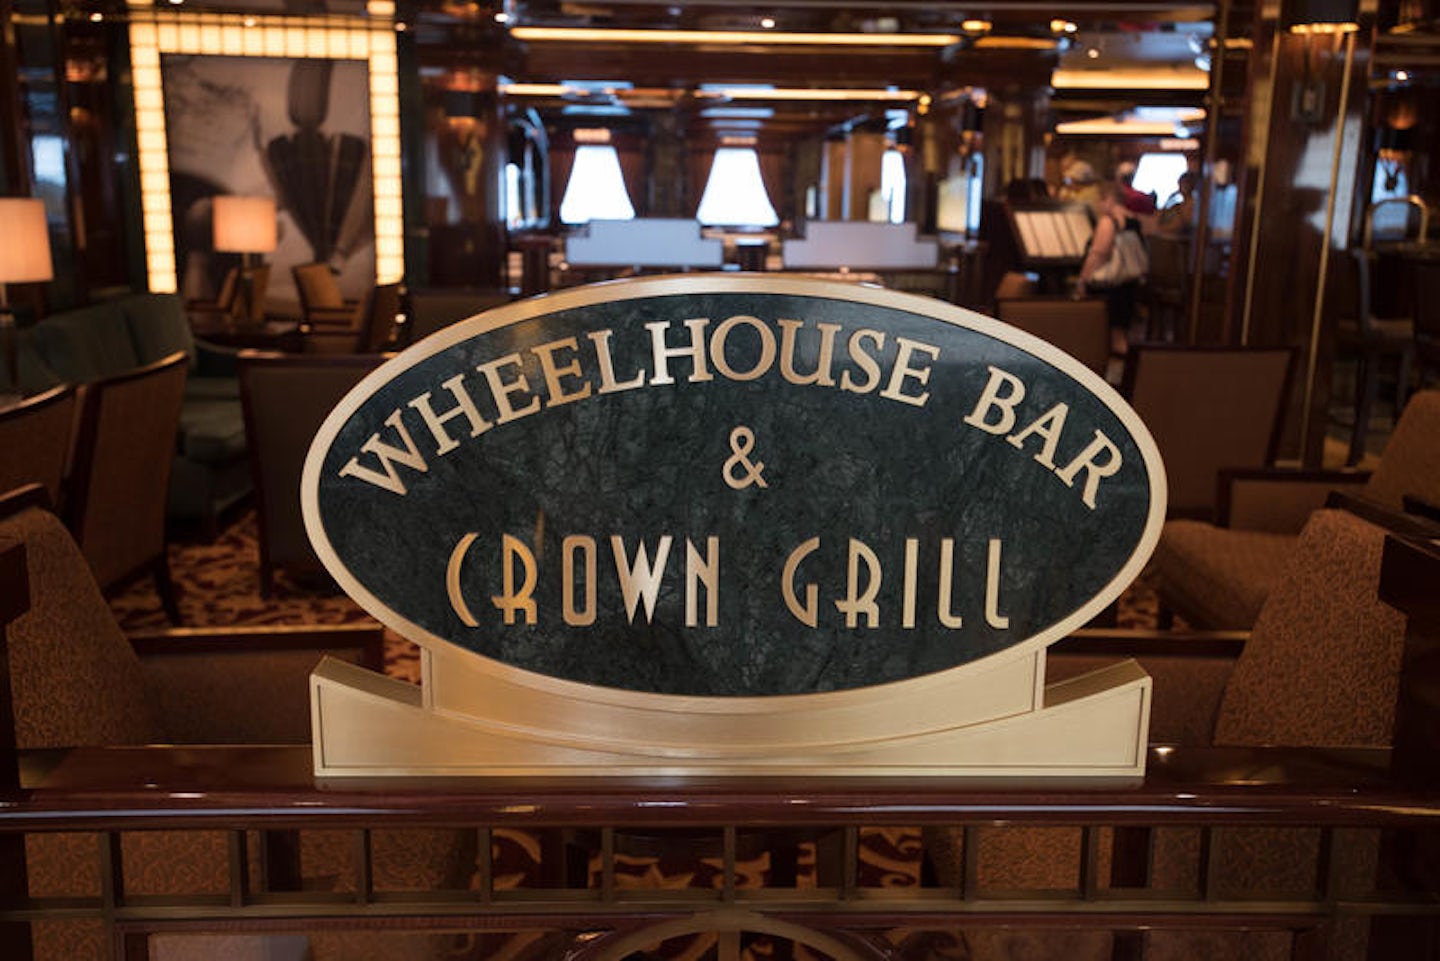 Wheelhouse Bar and Crown Grill on Regal Princess